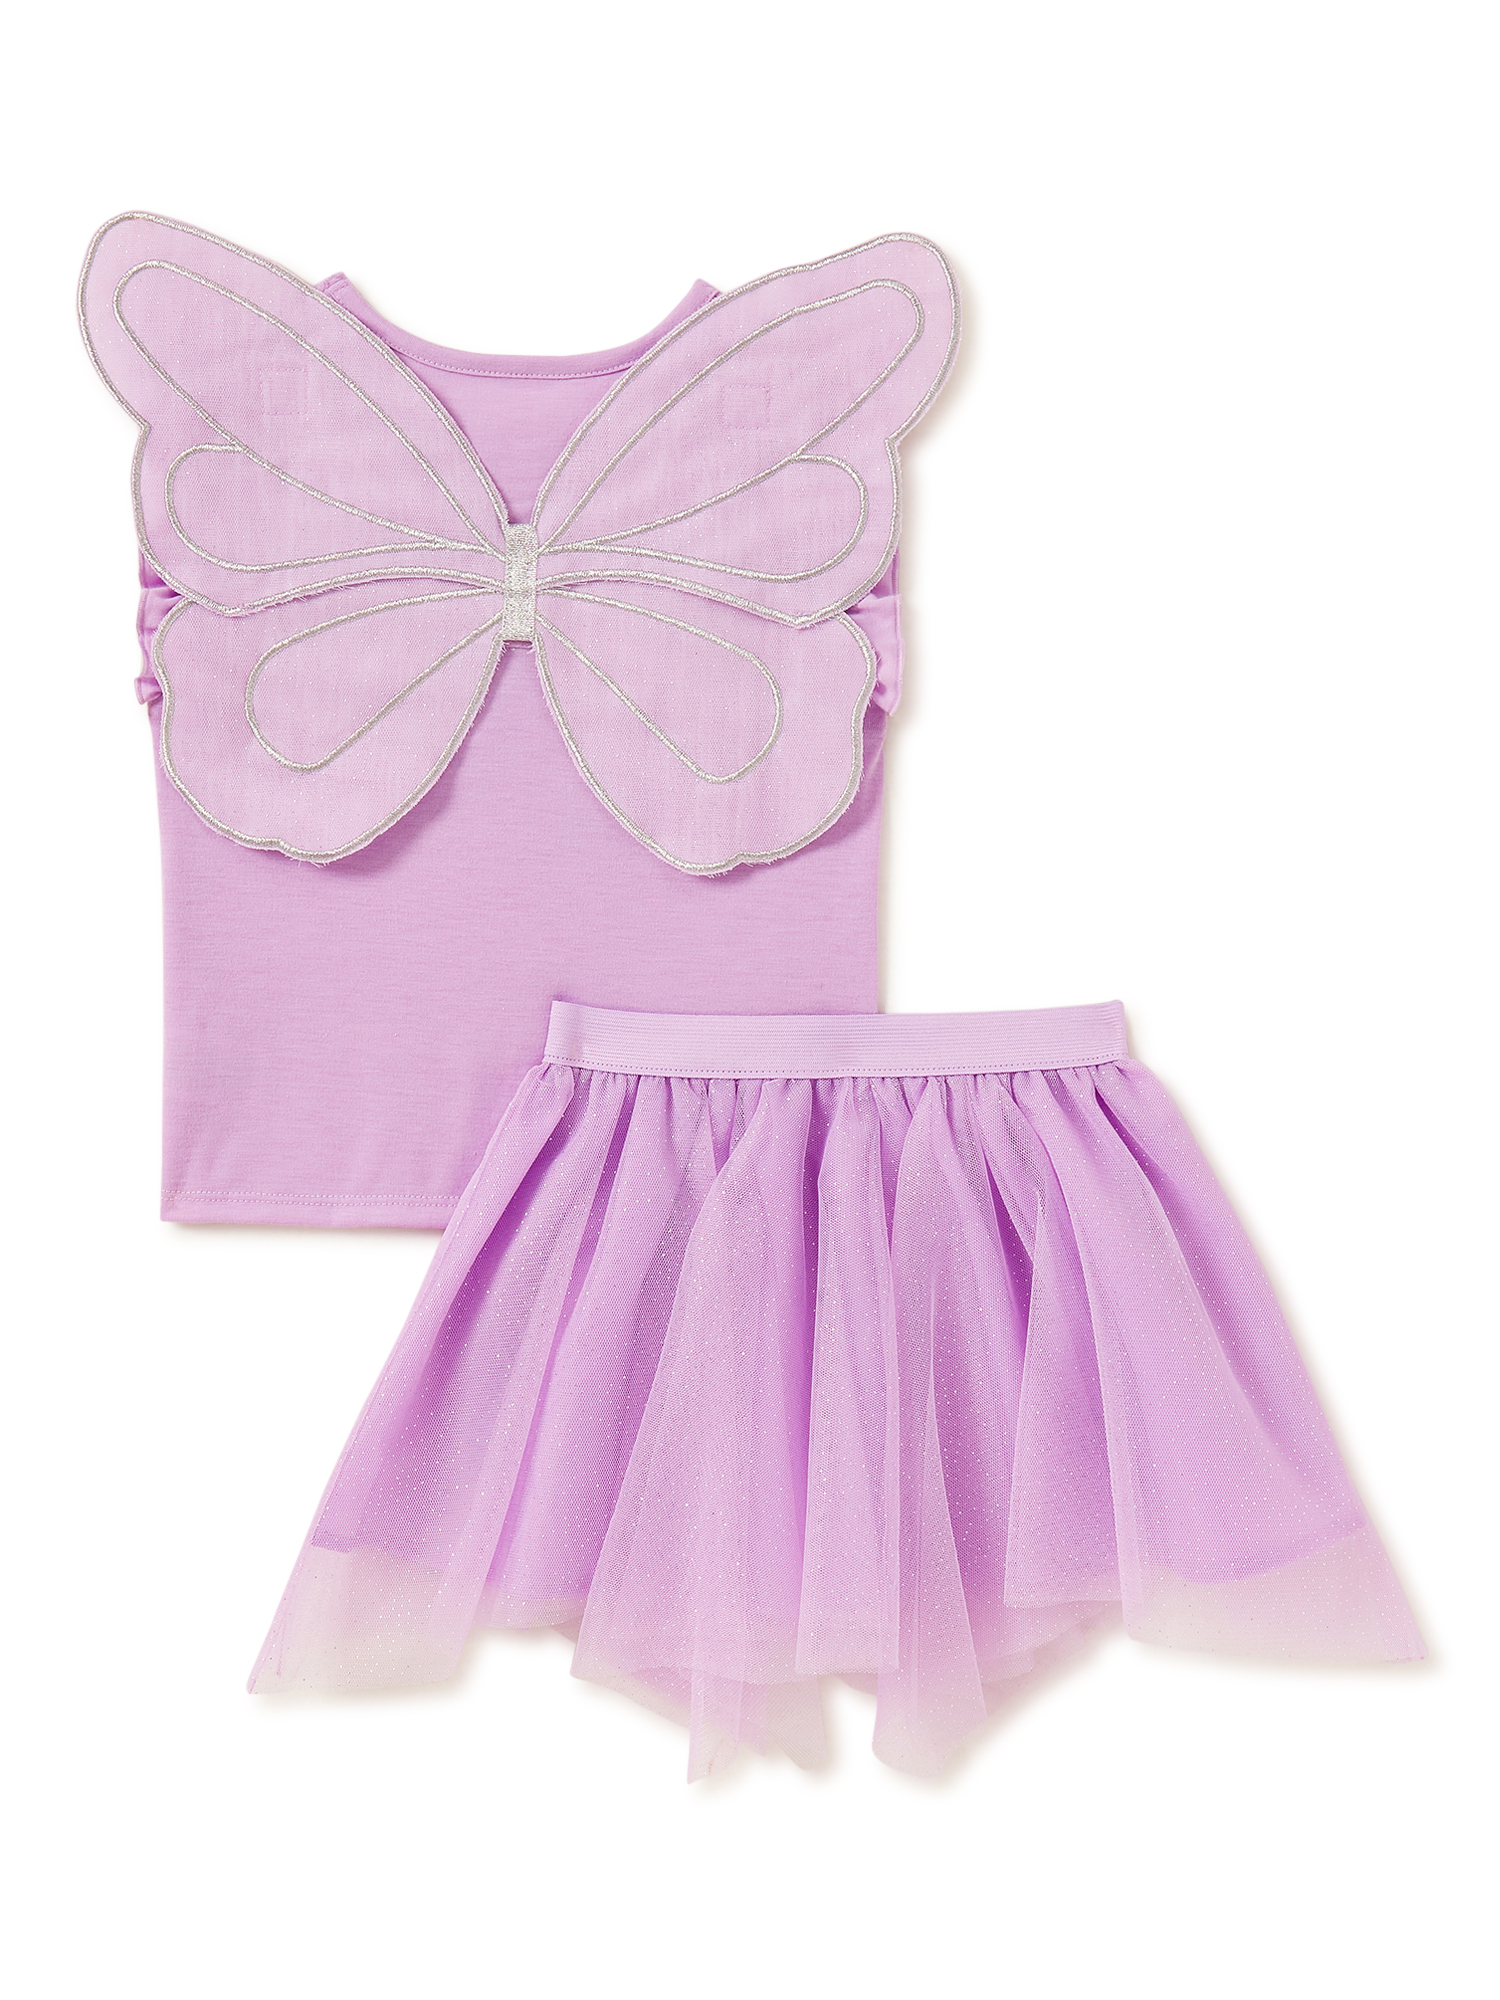 Wonder Nation Baby & Toddler Girls Dress-Up Flutter Sleeve Top, Tutu Skirt & Accessory, 3-Piece Set, Sizes 12M-5T - image 3 of 3